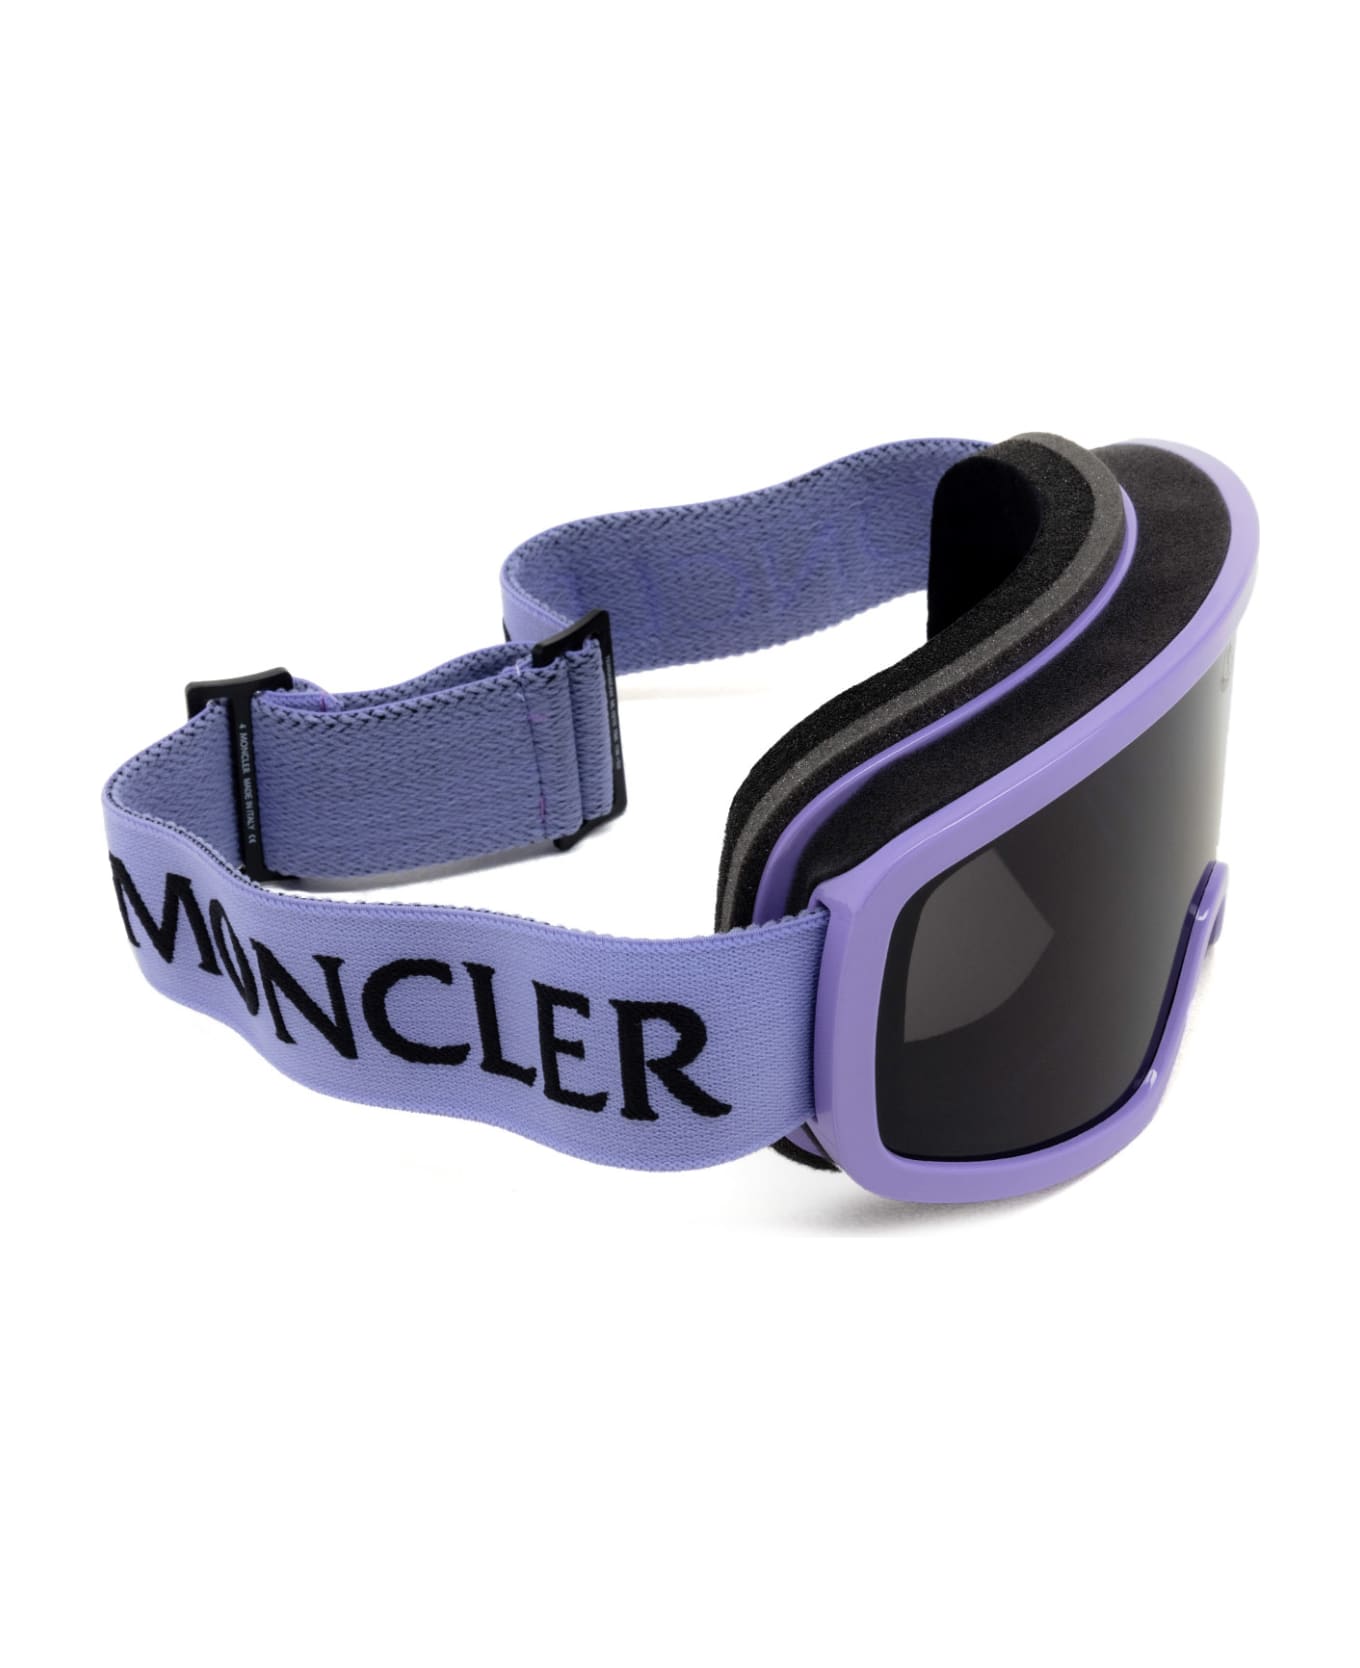 Moncler Eyewear Ml0215 Shiny Lilac Sunglasses - Shiny Lilac